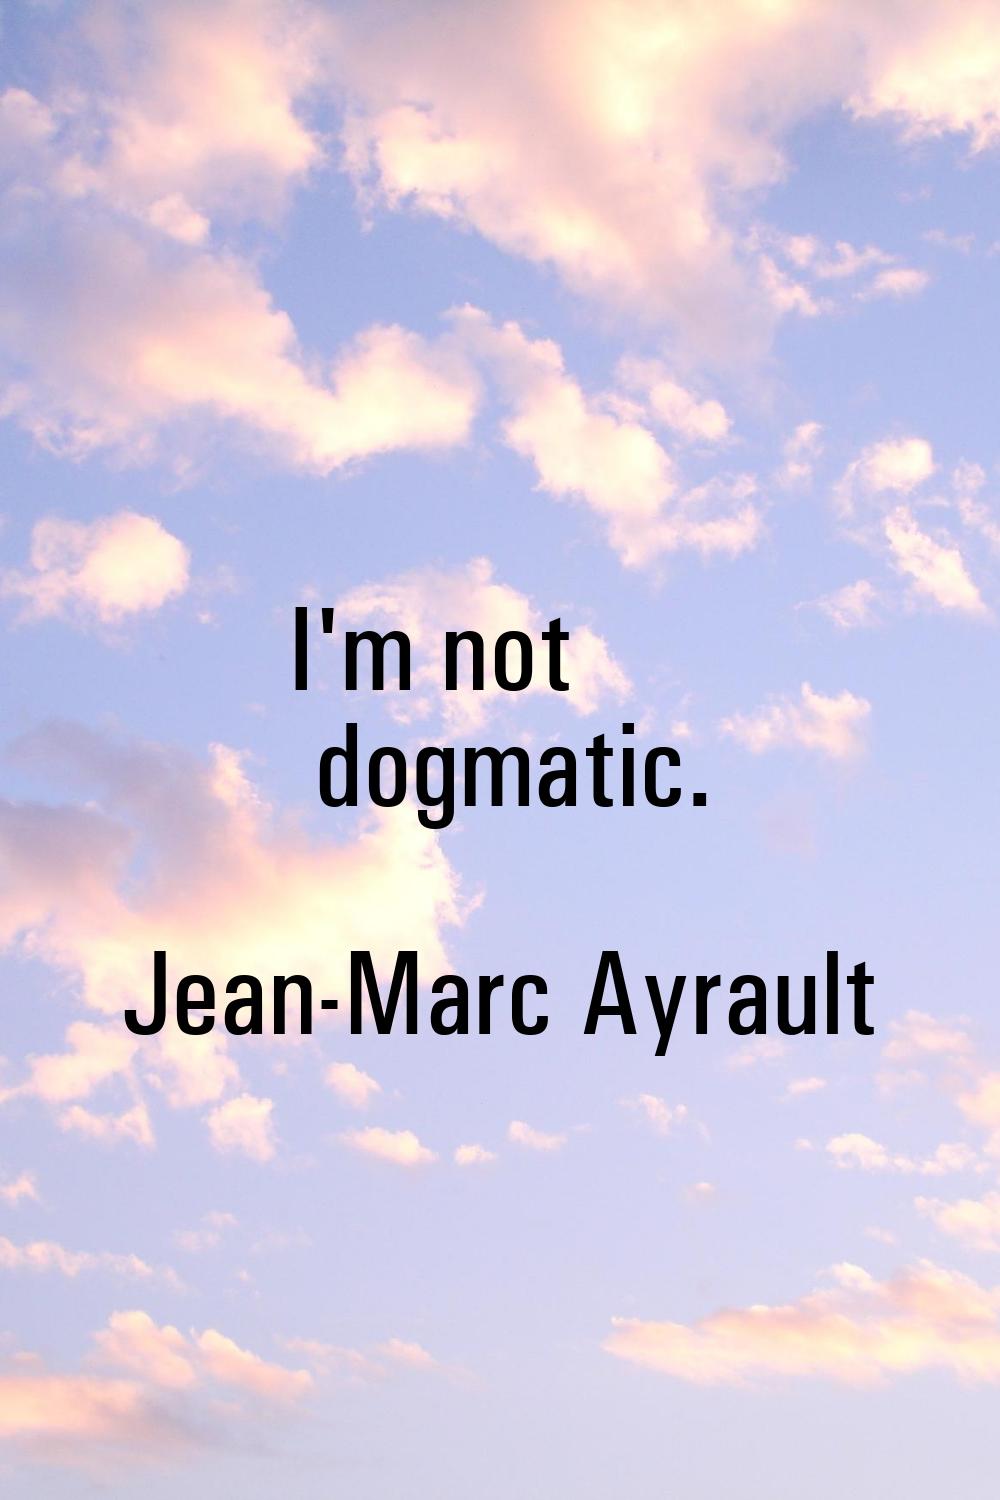 I'm not dogmatic.